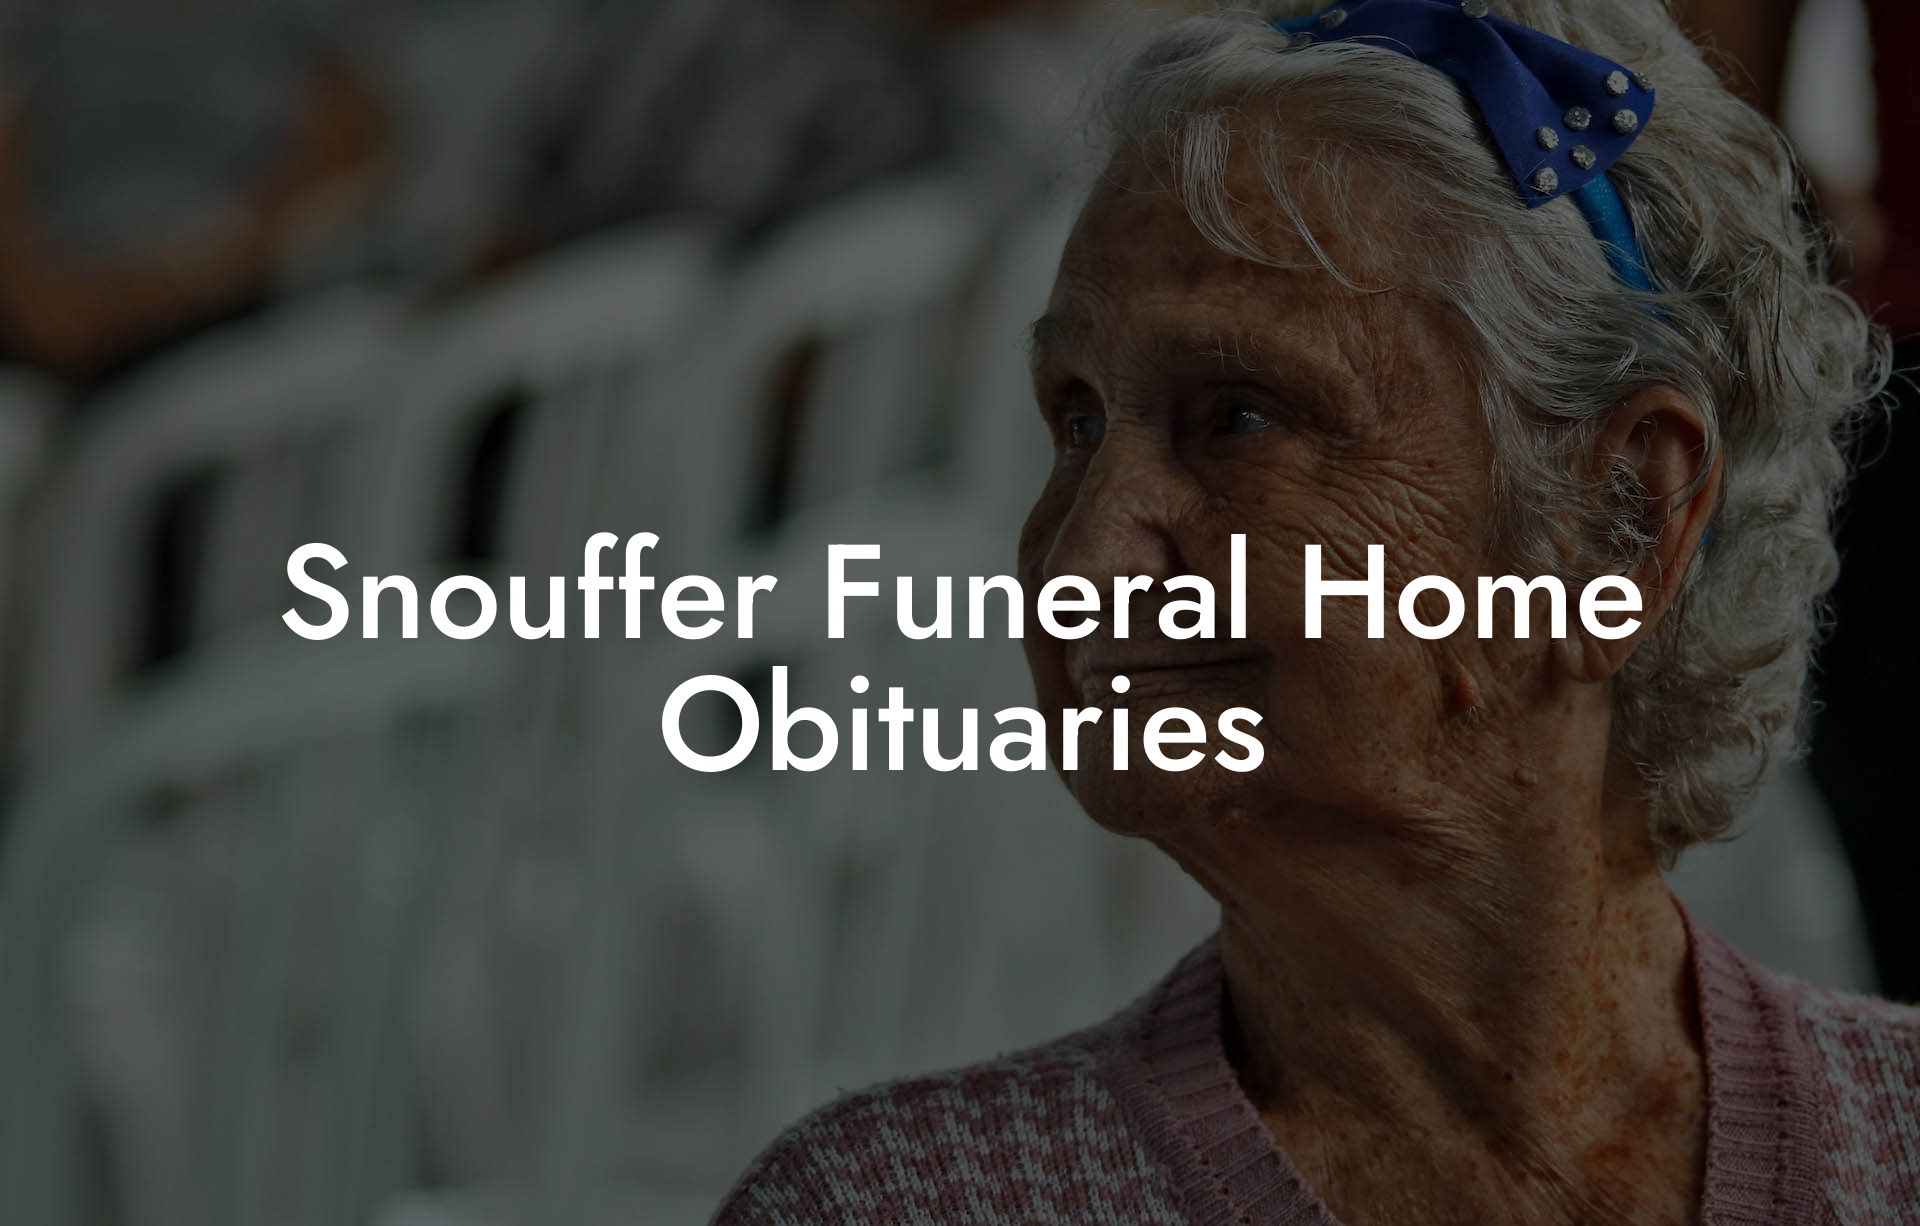 Snouffer Funeral Home Obituaries